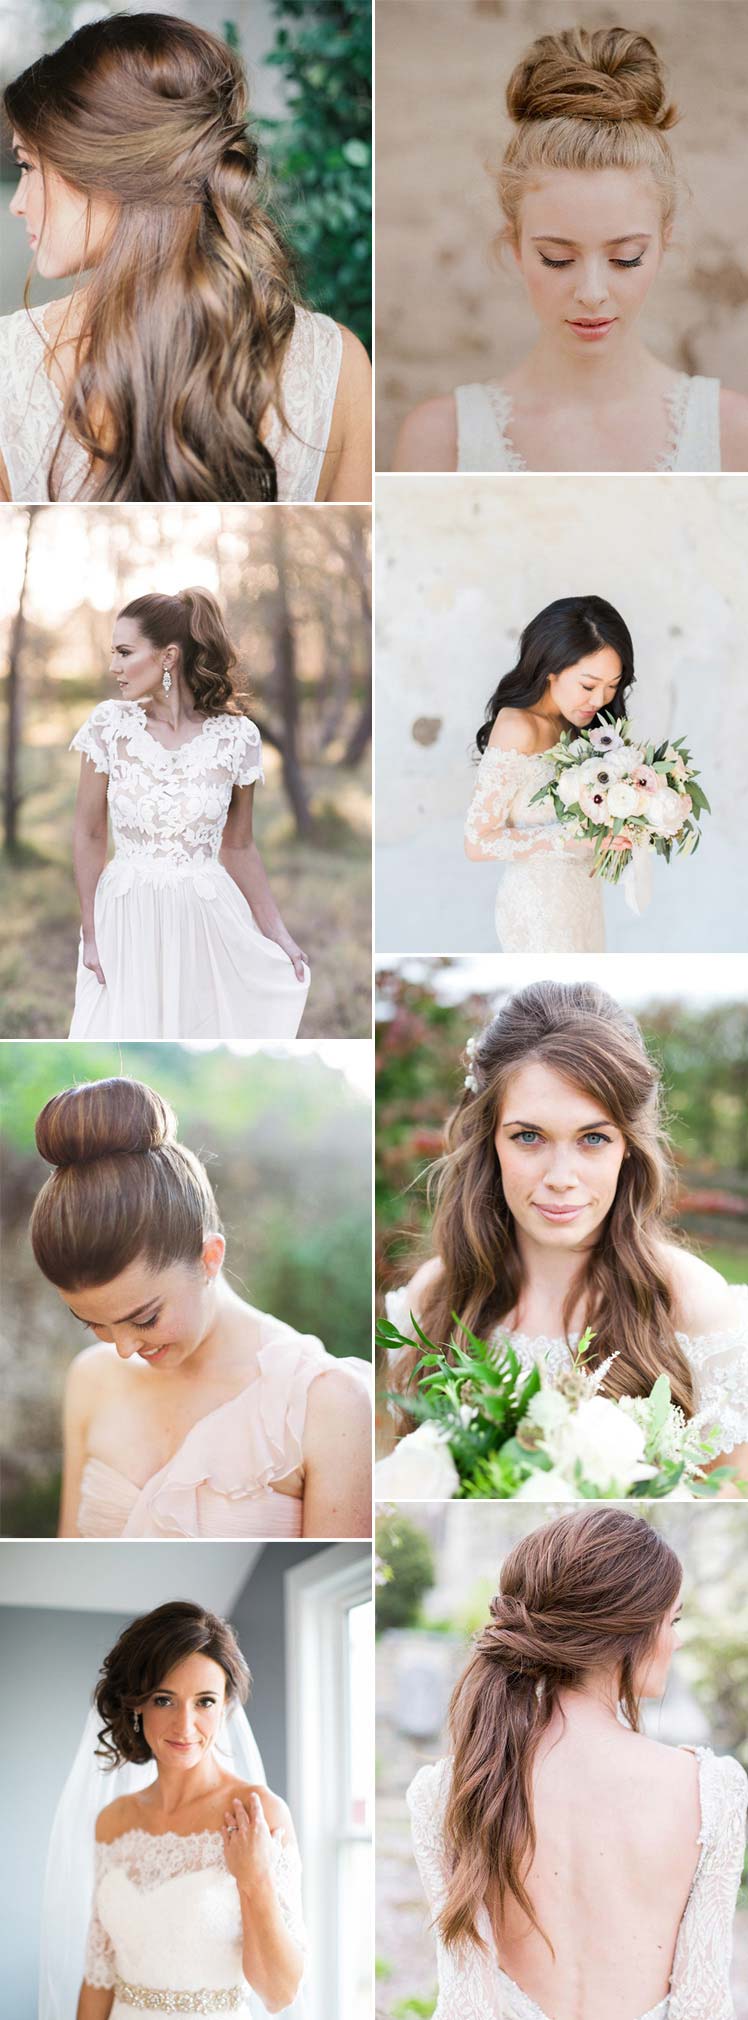 Wedding hairstyle ideas for stylish brides